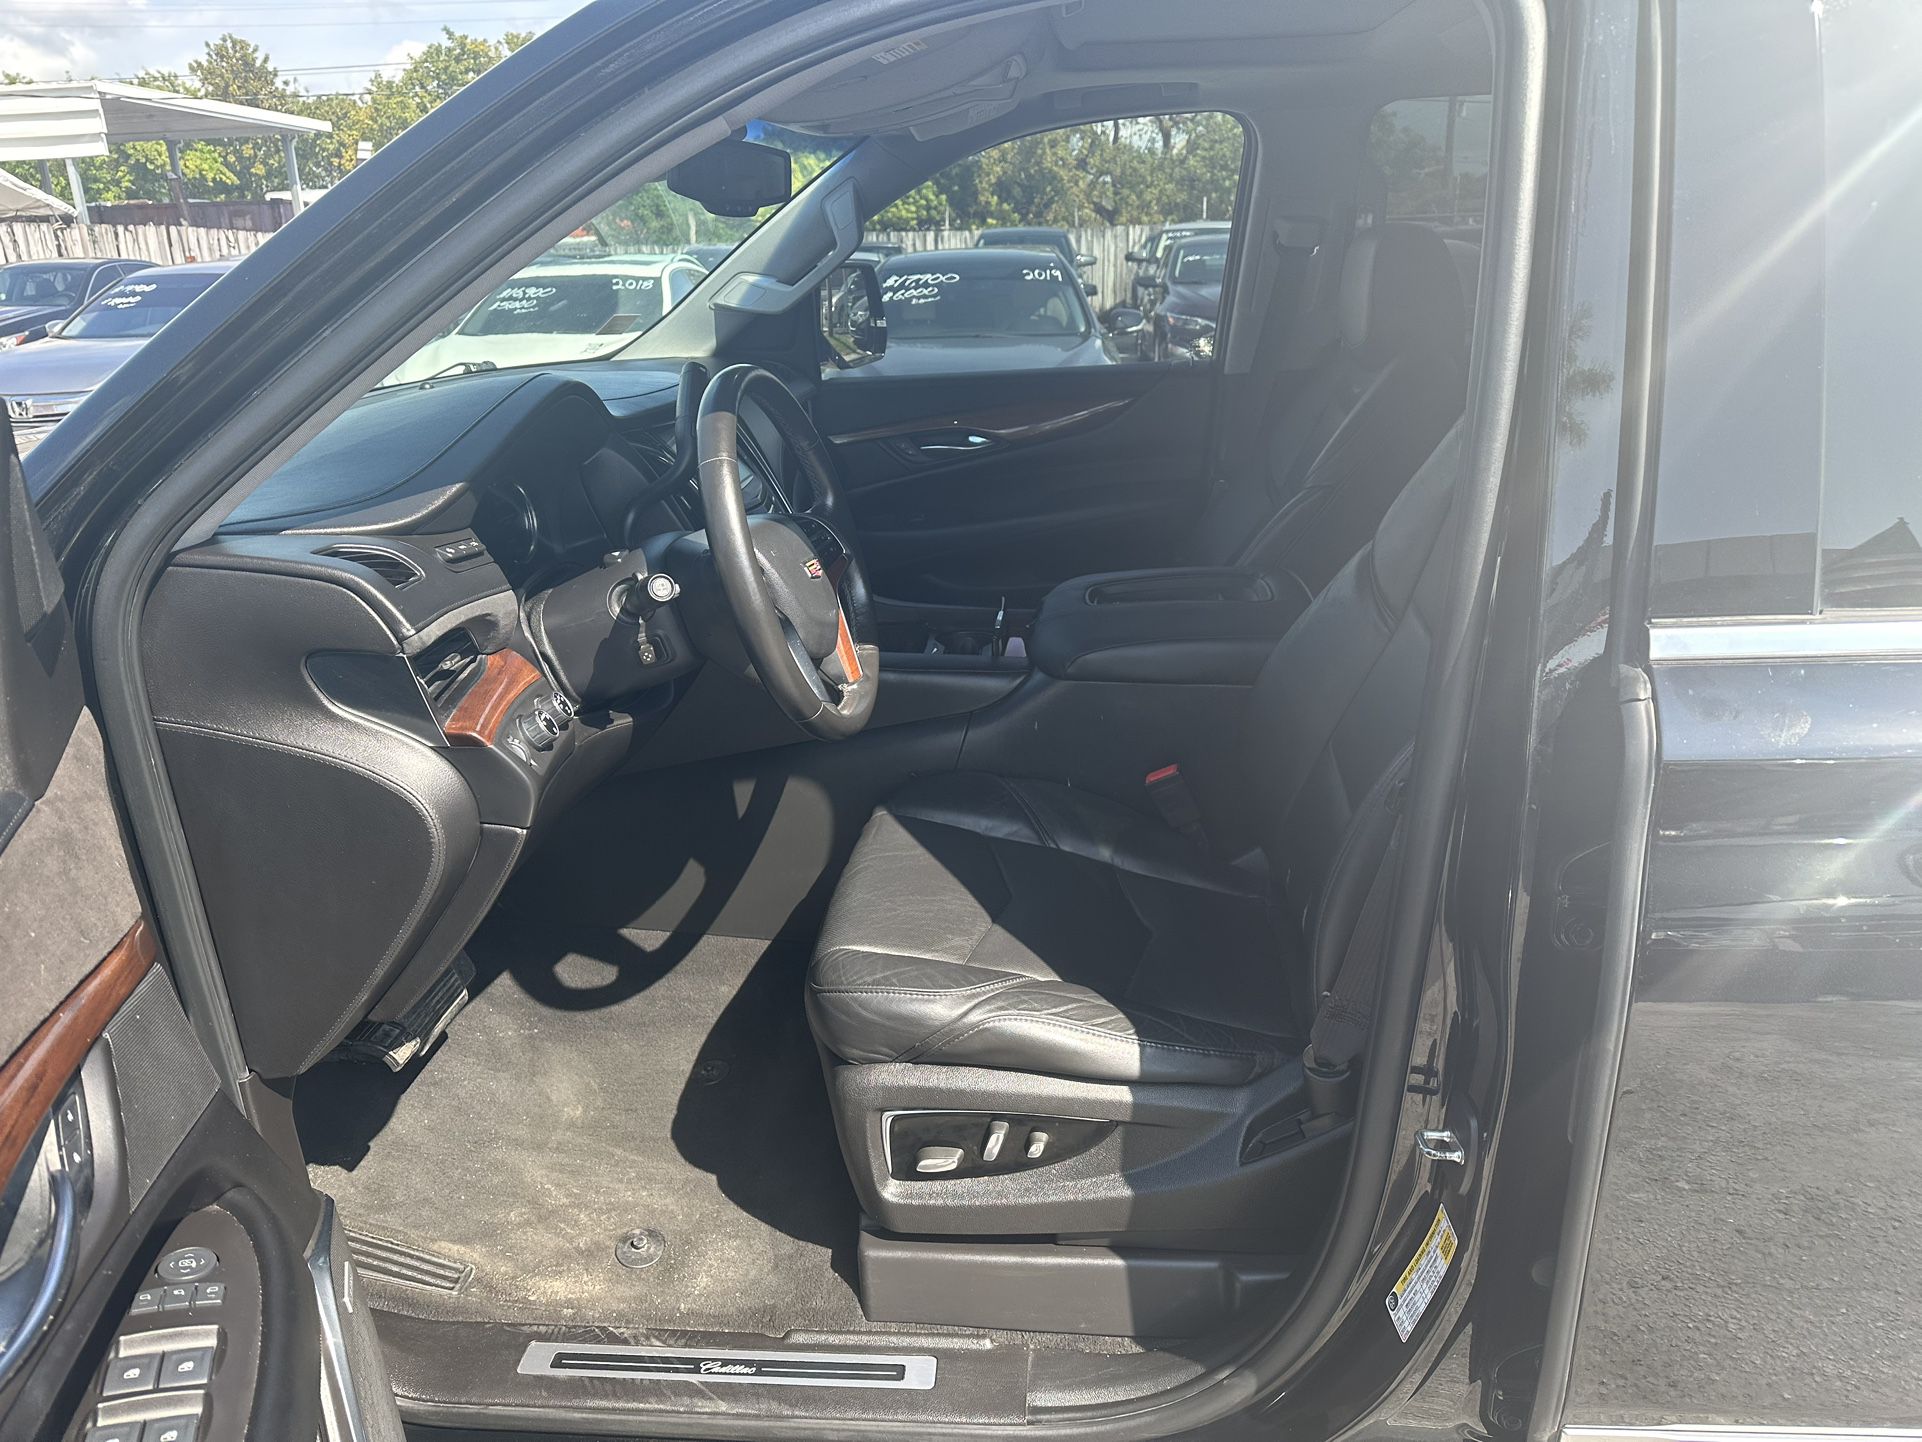 used 2016 Cadillac Escalade XL - interior view 1